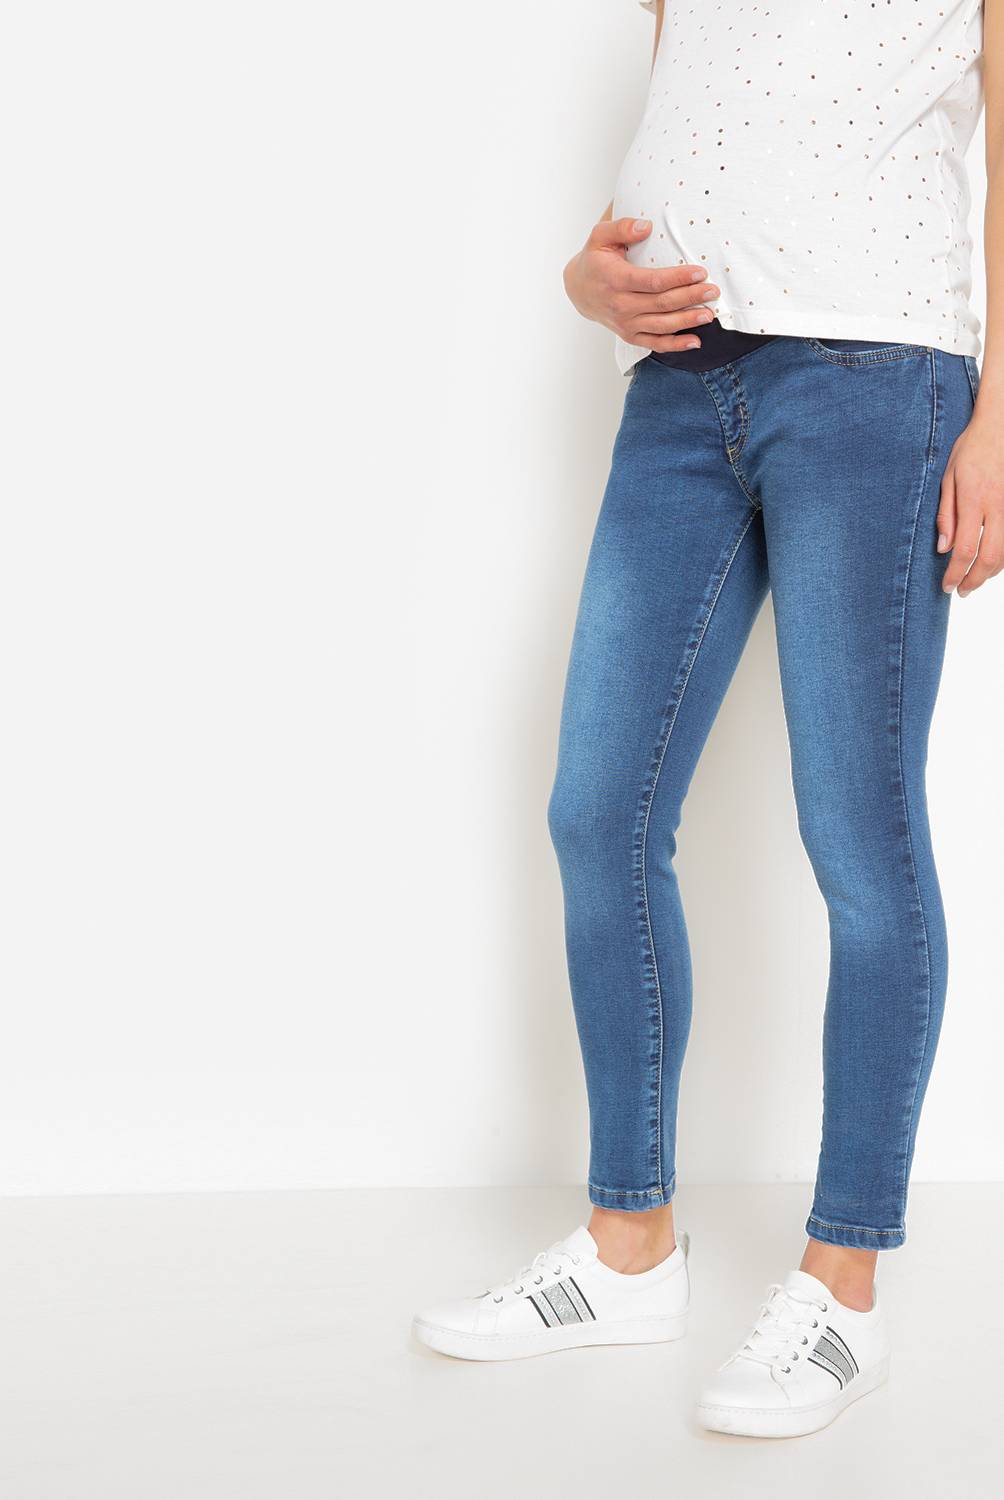 MA.DE - Jeans Skinny Tiro Alto Mujer